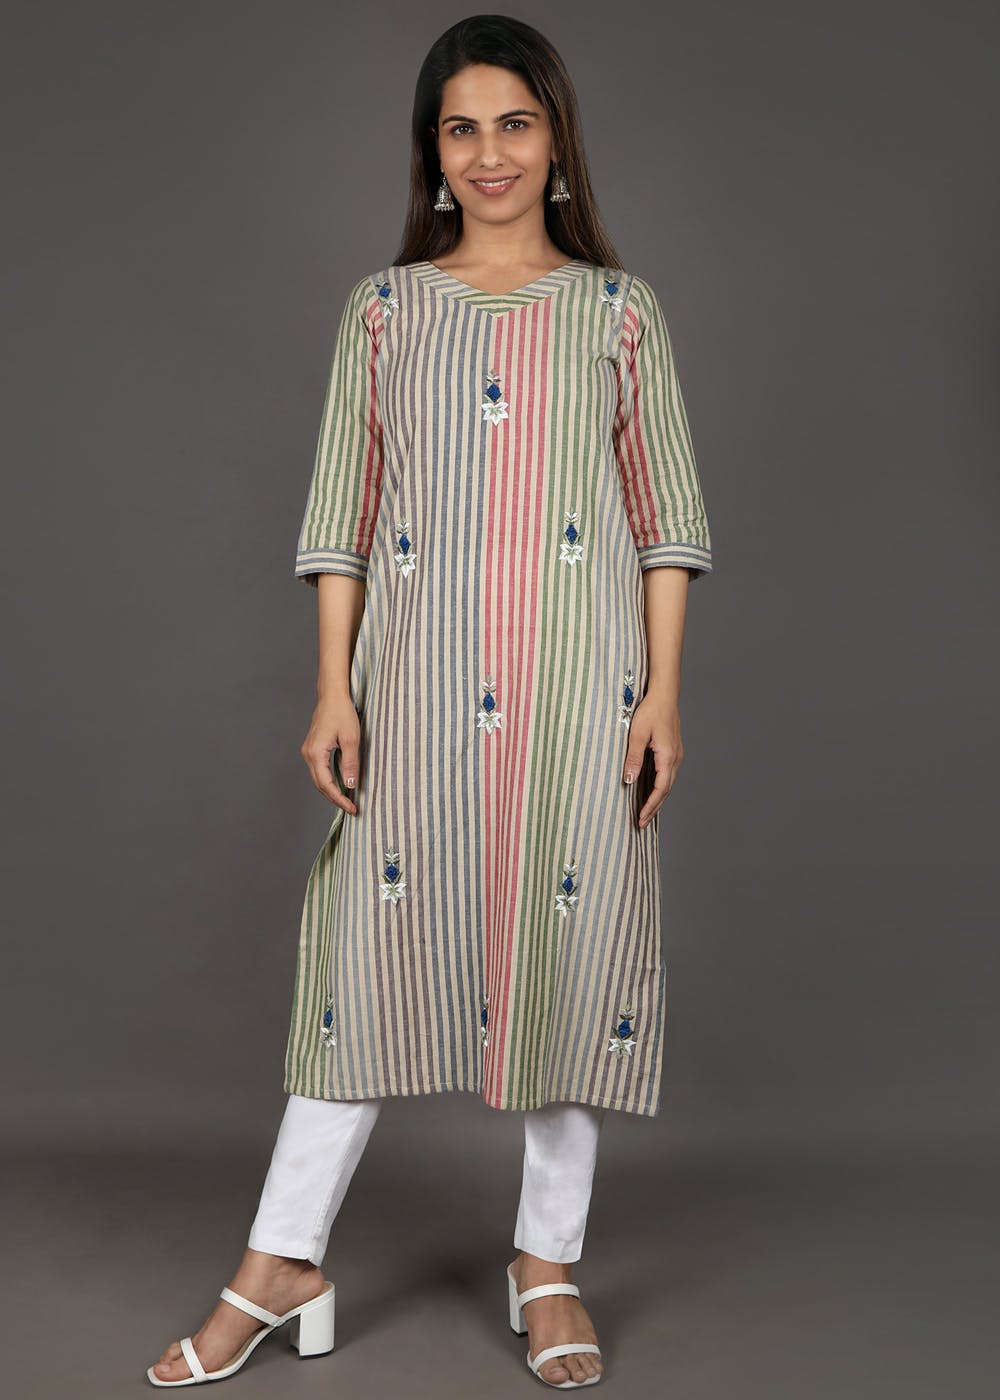 Get Floral Embroidered Pastel Striped Handloom Kurta at ₹ 1750 | LBB Shop